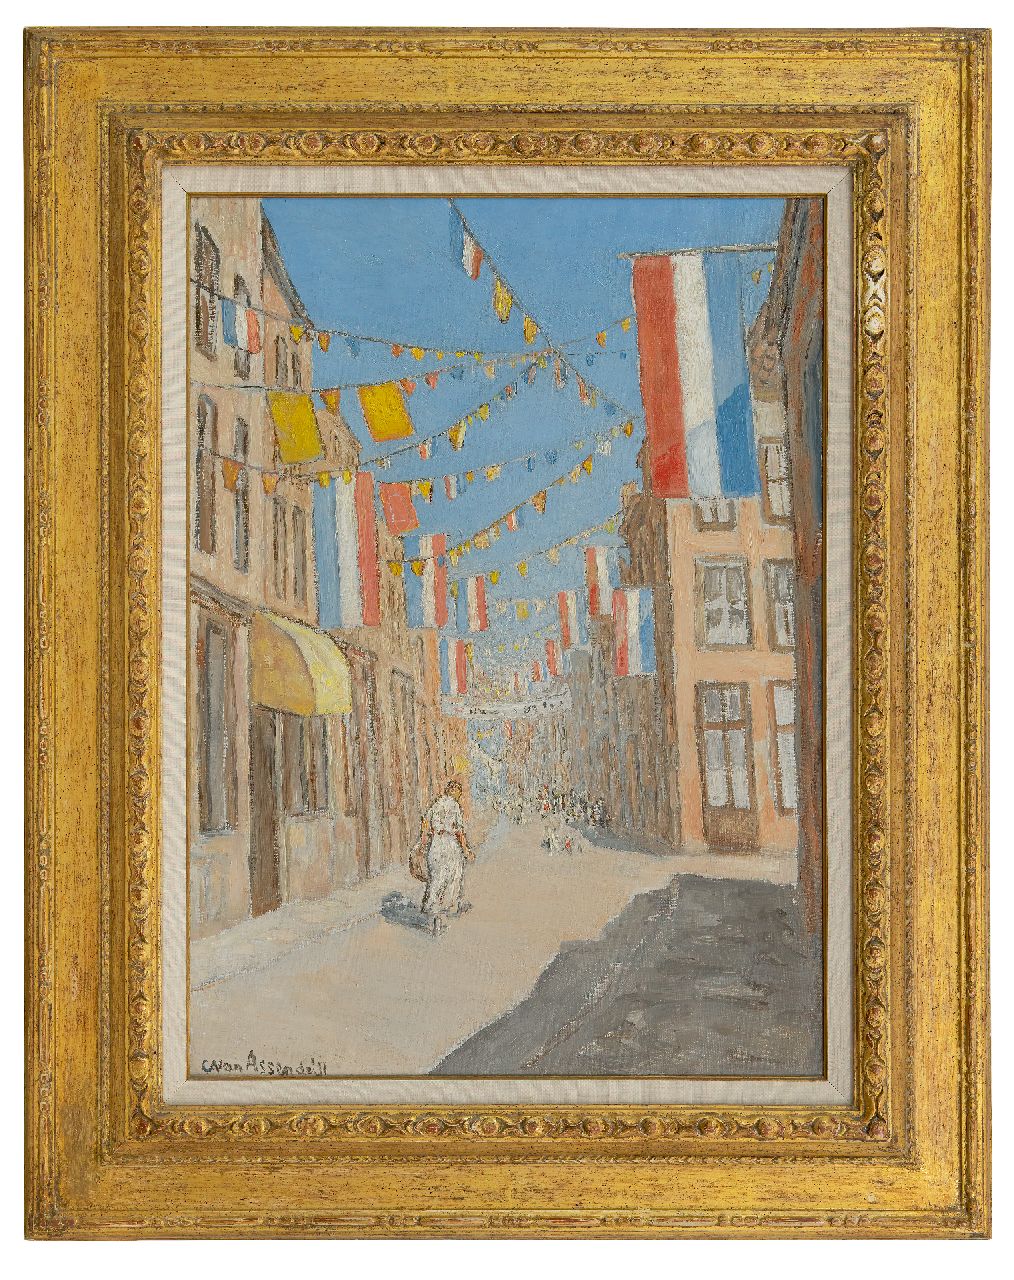 Assendelft C.A. van | Cornelis Albert van Assendelft, Queens day celebrations, Öl auf Leinwand 60,0 x 43,3 cm, signed l.l.